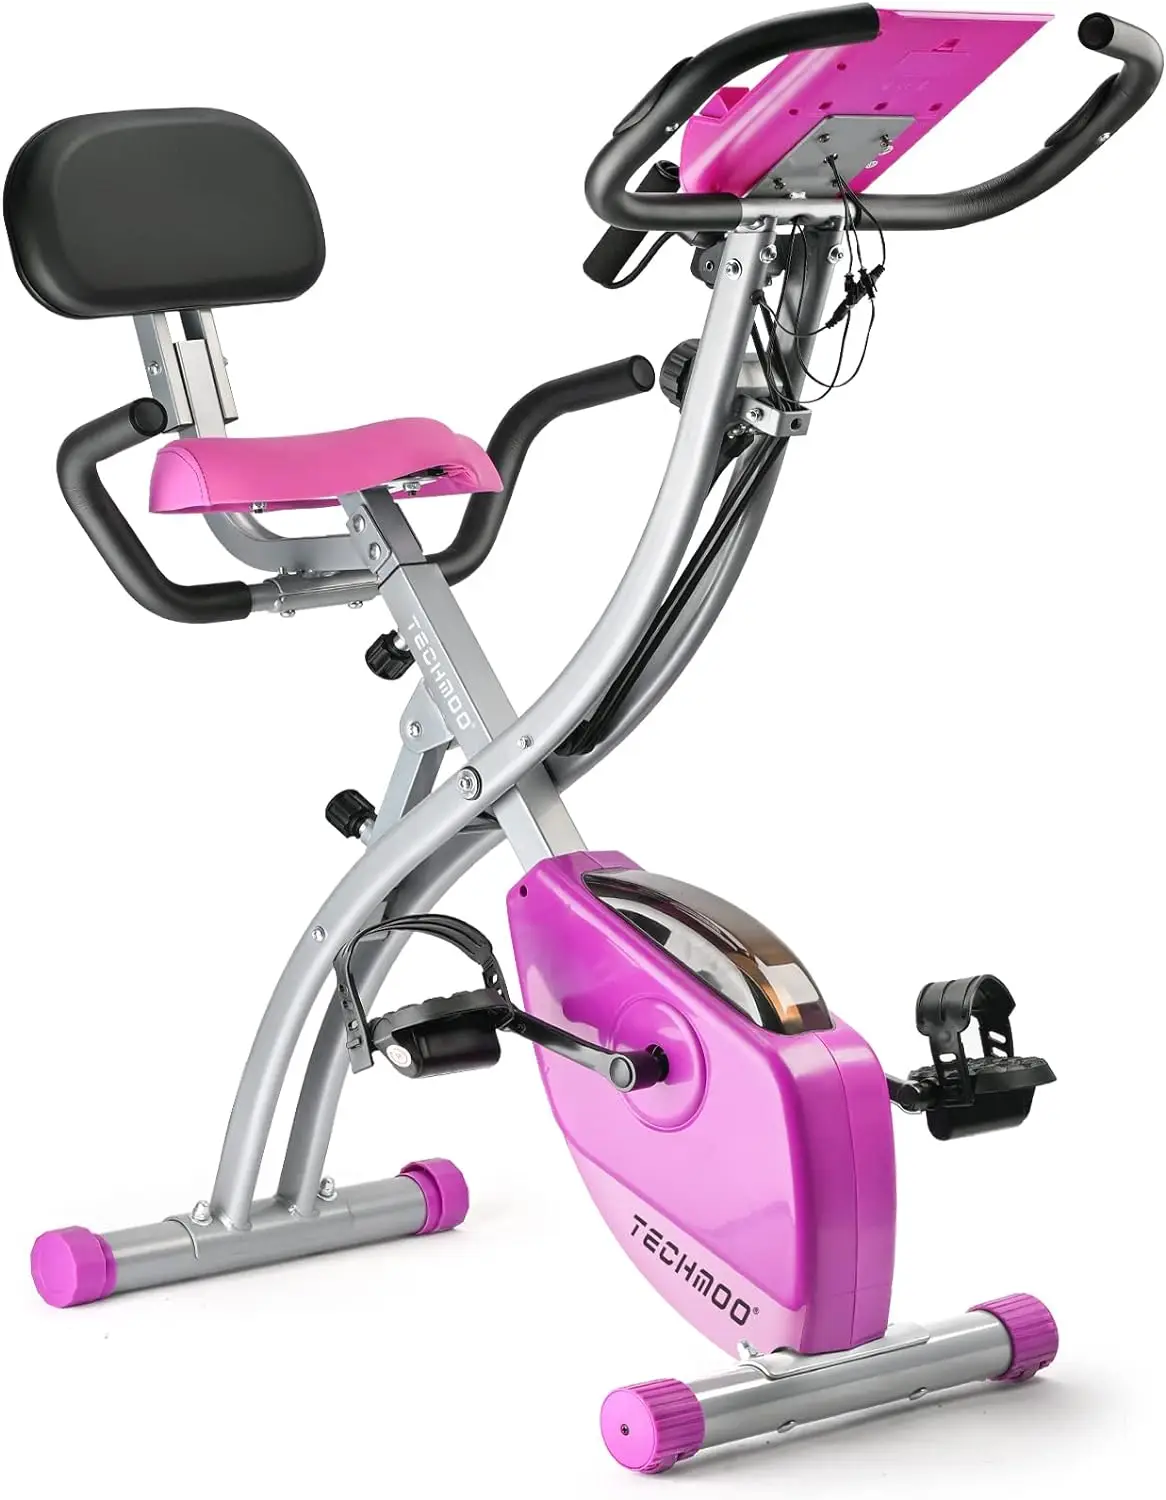 

Folding Exercise Bike Portable Upright Adjustable Backrest Cycling Recumbent Stationary Bike Slim Indoor Workout Fitness Cardio